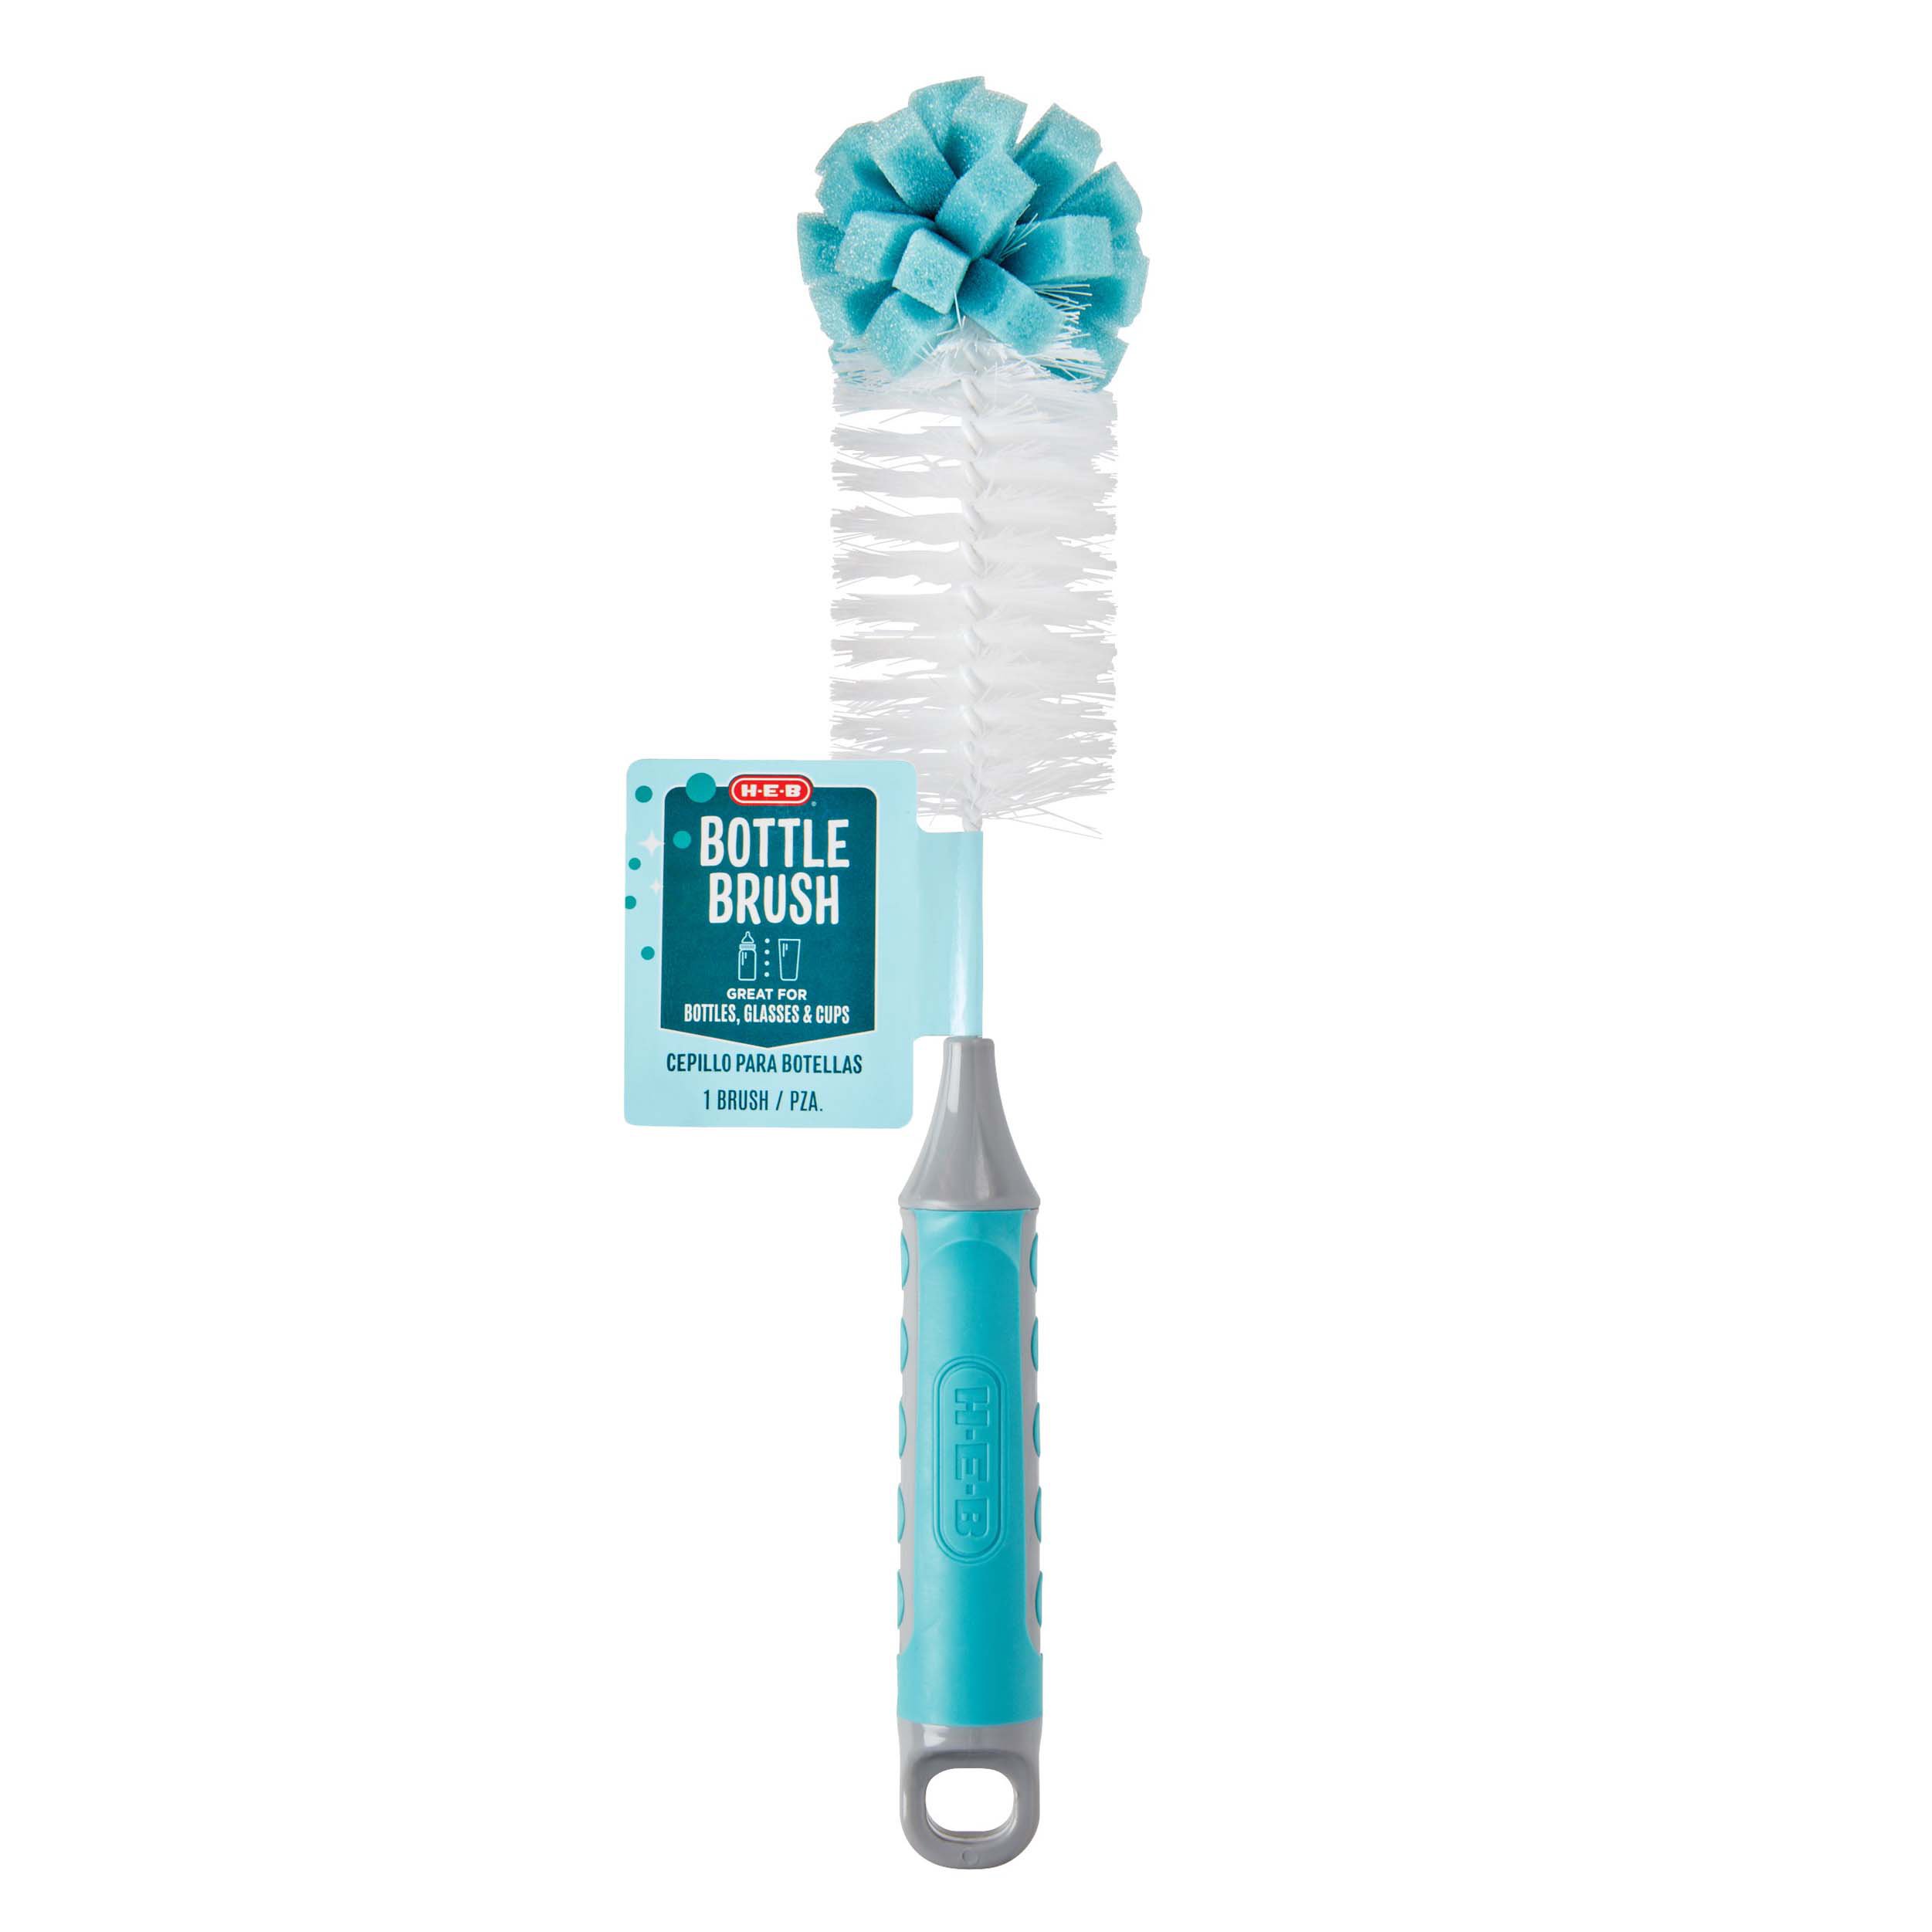 Libman Small Scrub Brush - Shop Brushes at H-E-B